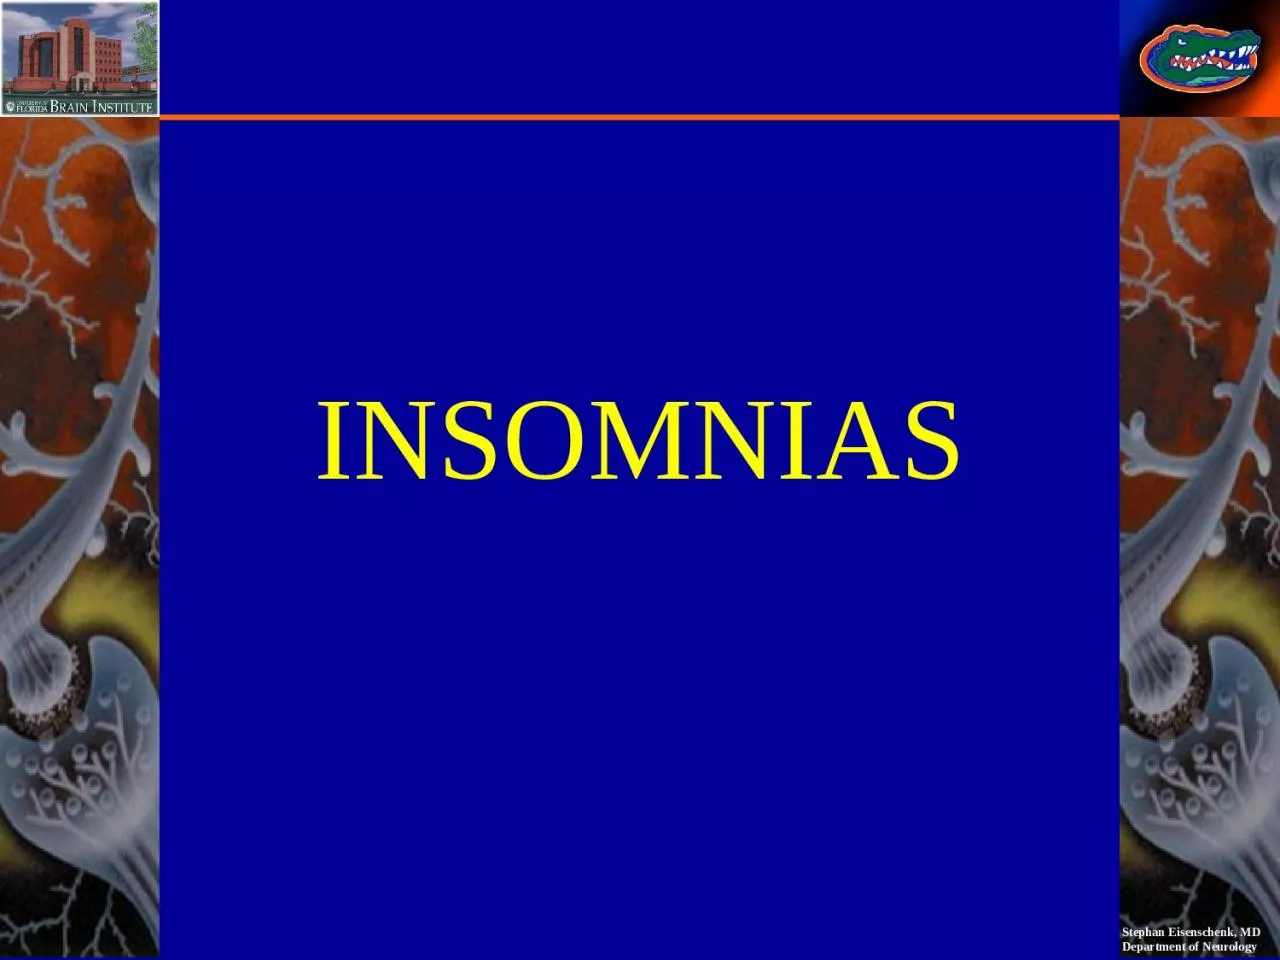 INSOMNIAS INSOMNIAS   General criteria for insomnia